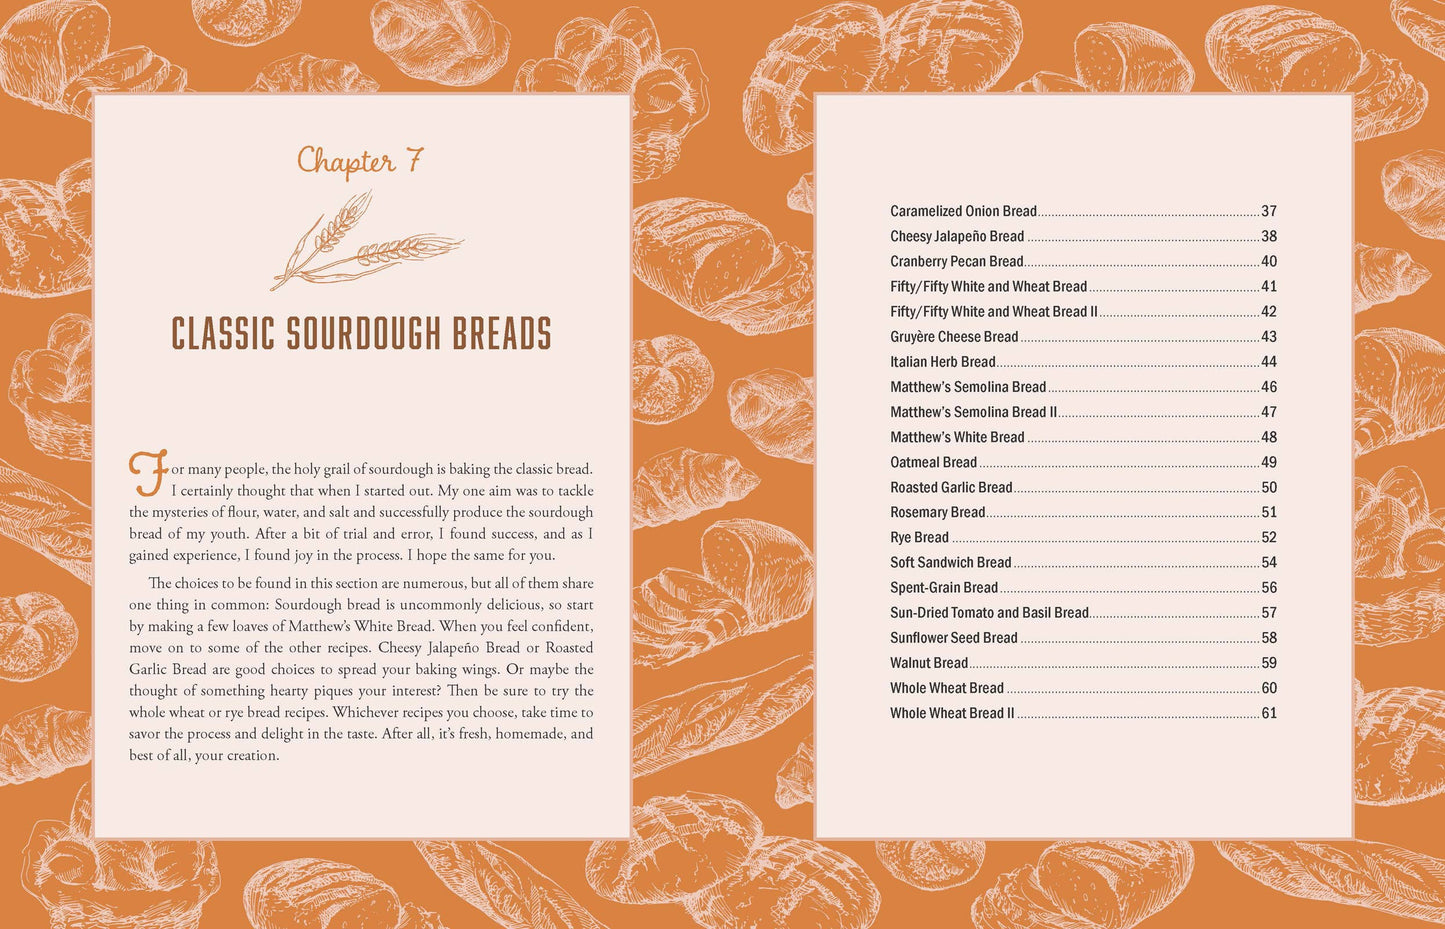 The Homestead Sourdough Cookbook, Book - Cookbook